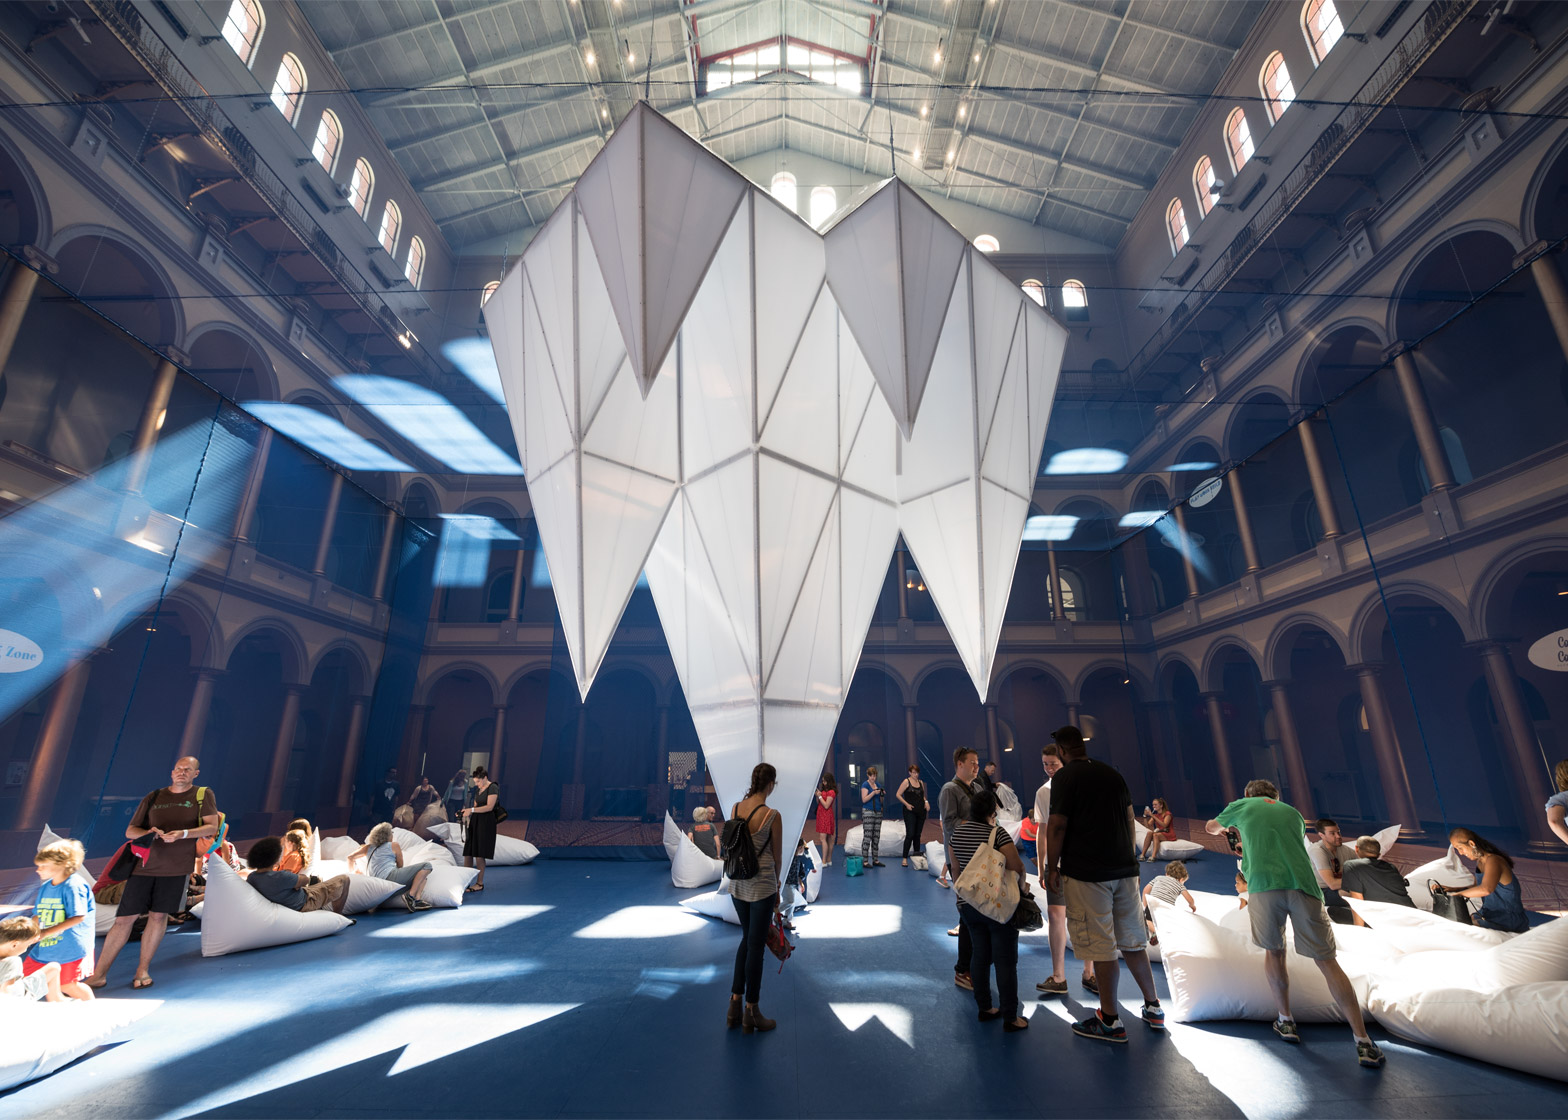  Instalacija vodi sante leda u muzej u Washingtonu